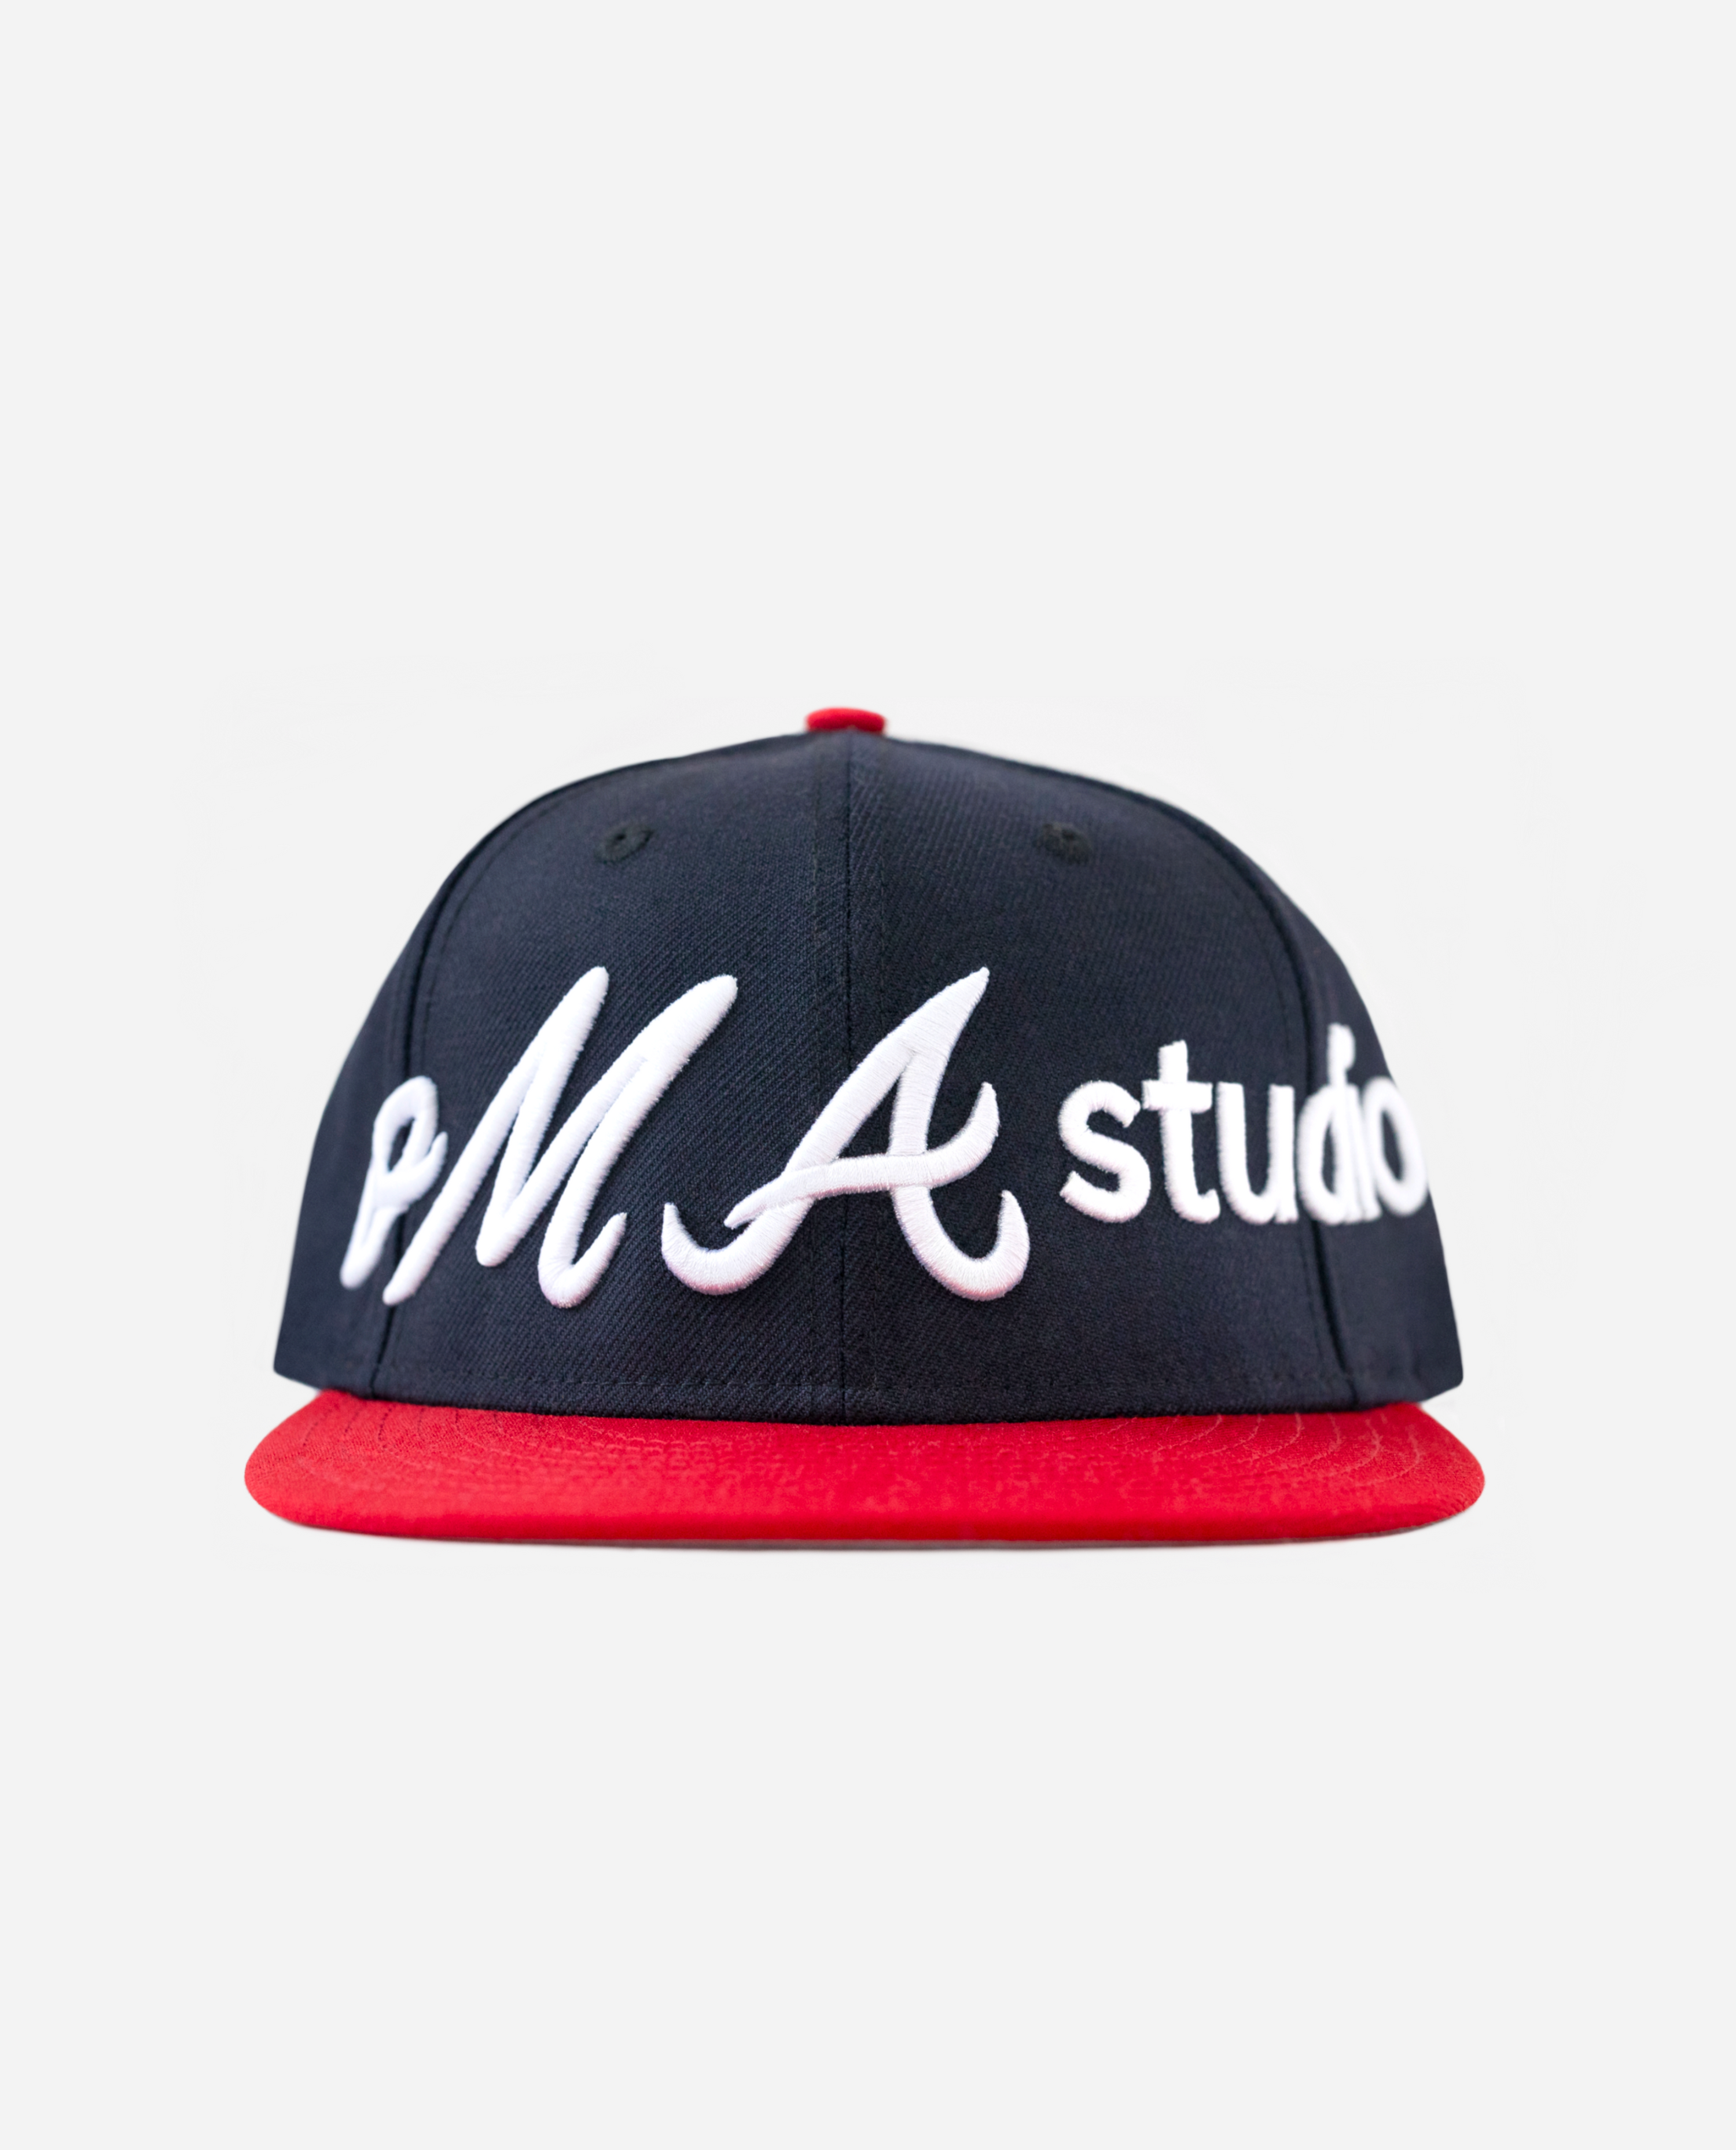 oMA STUDIOS FITTED HAT (ATLANTA)